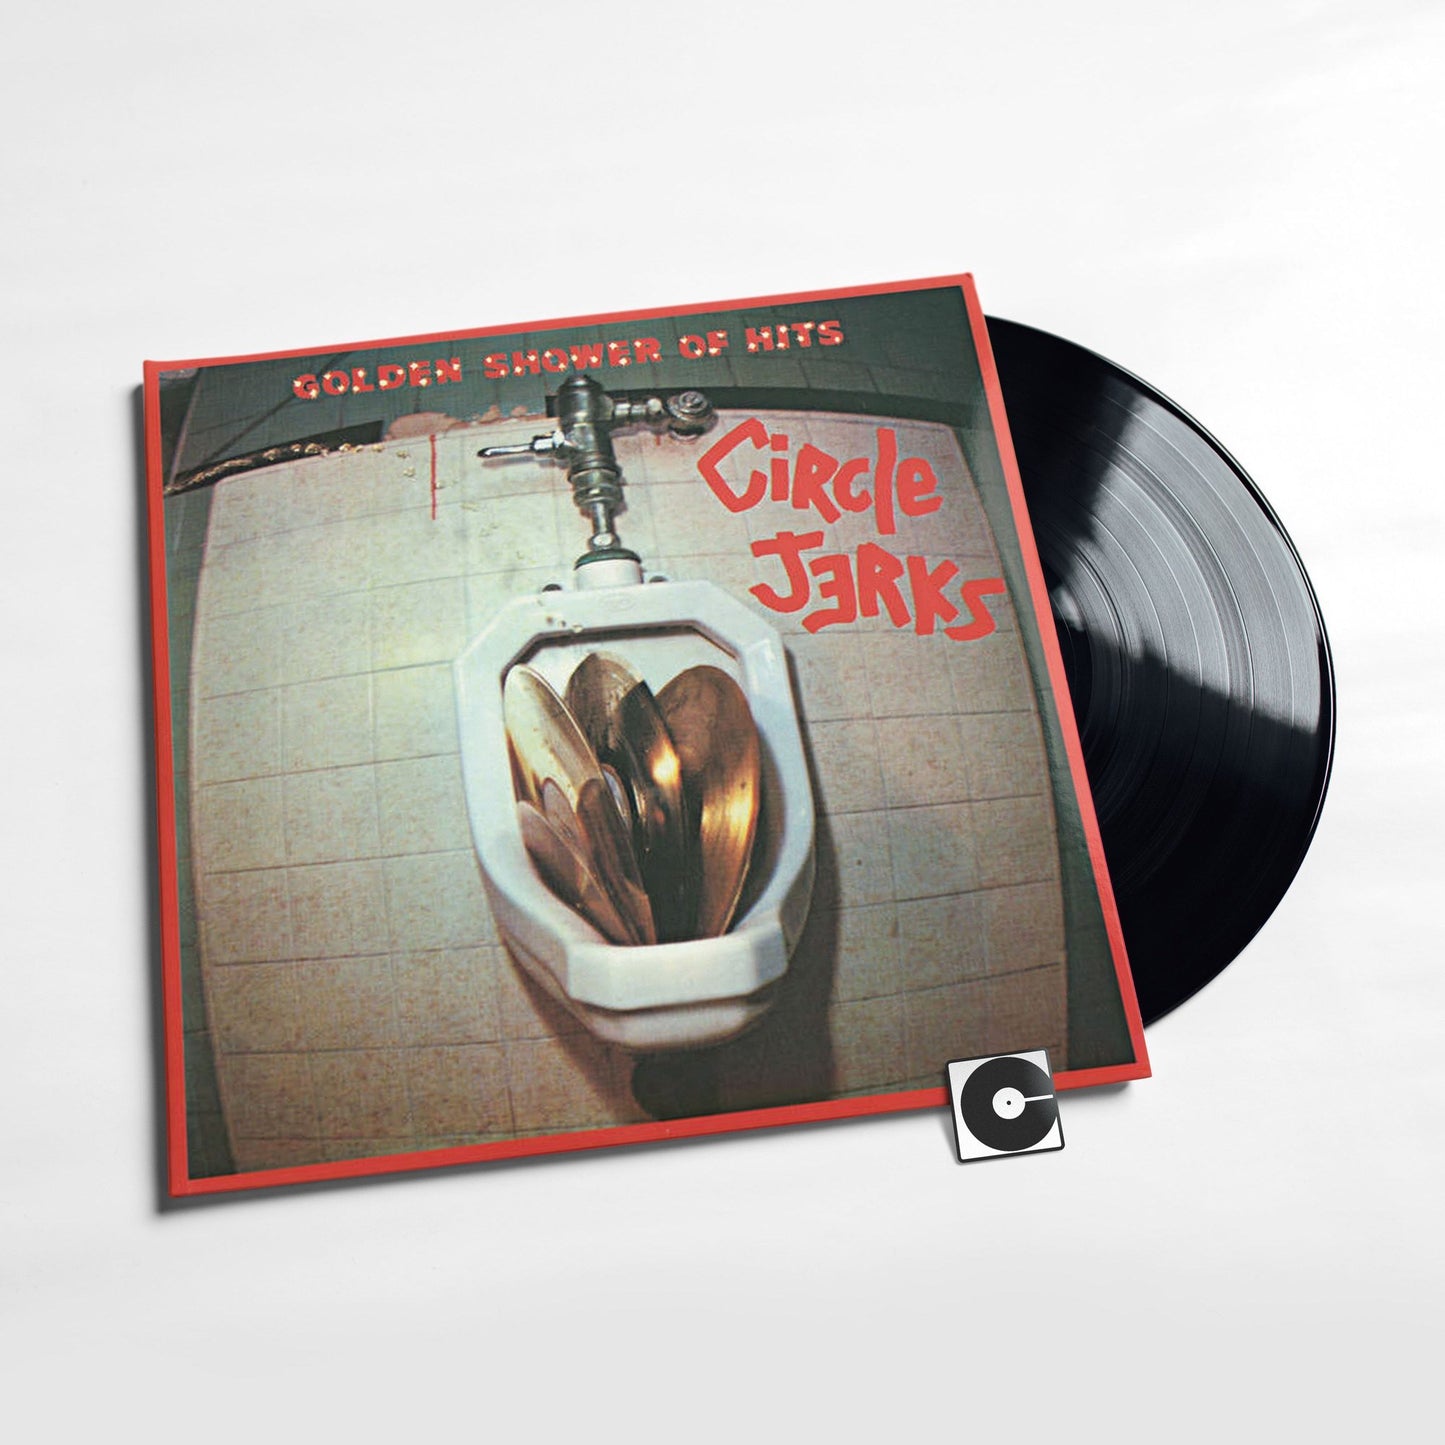 Circle Jerks - "Golden Shower of Hits"